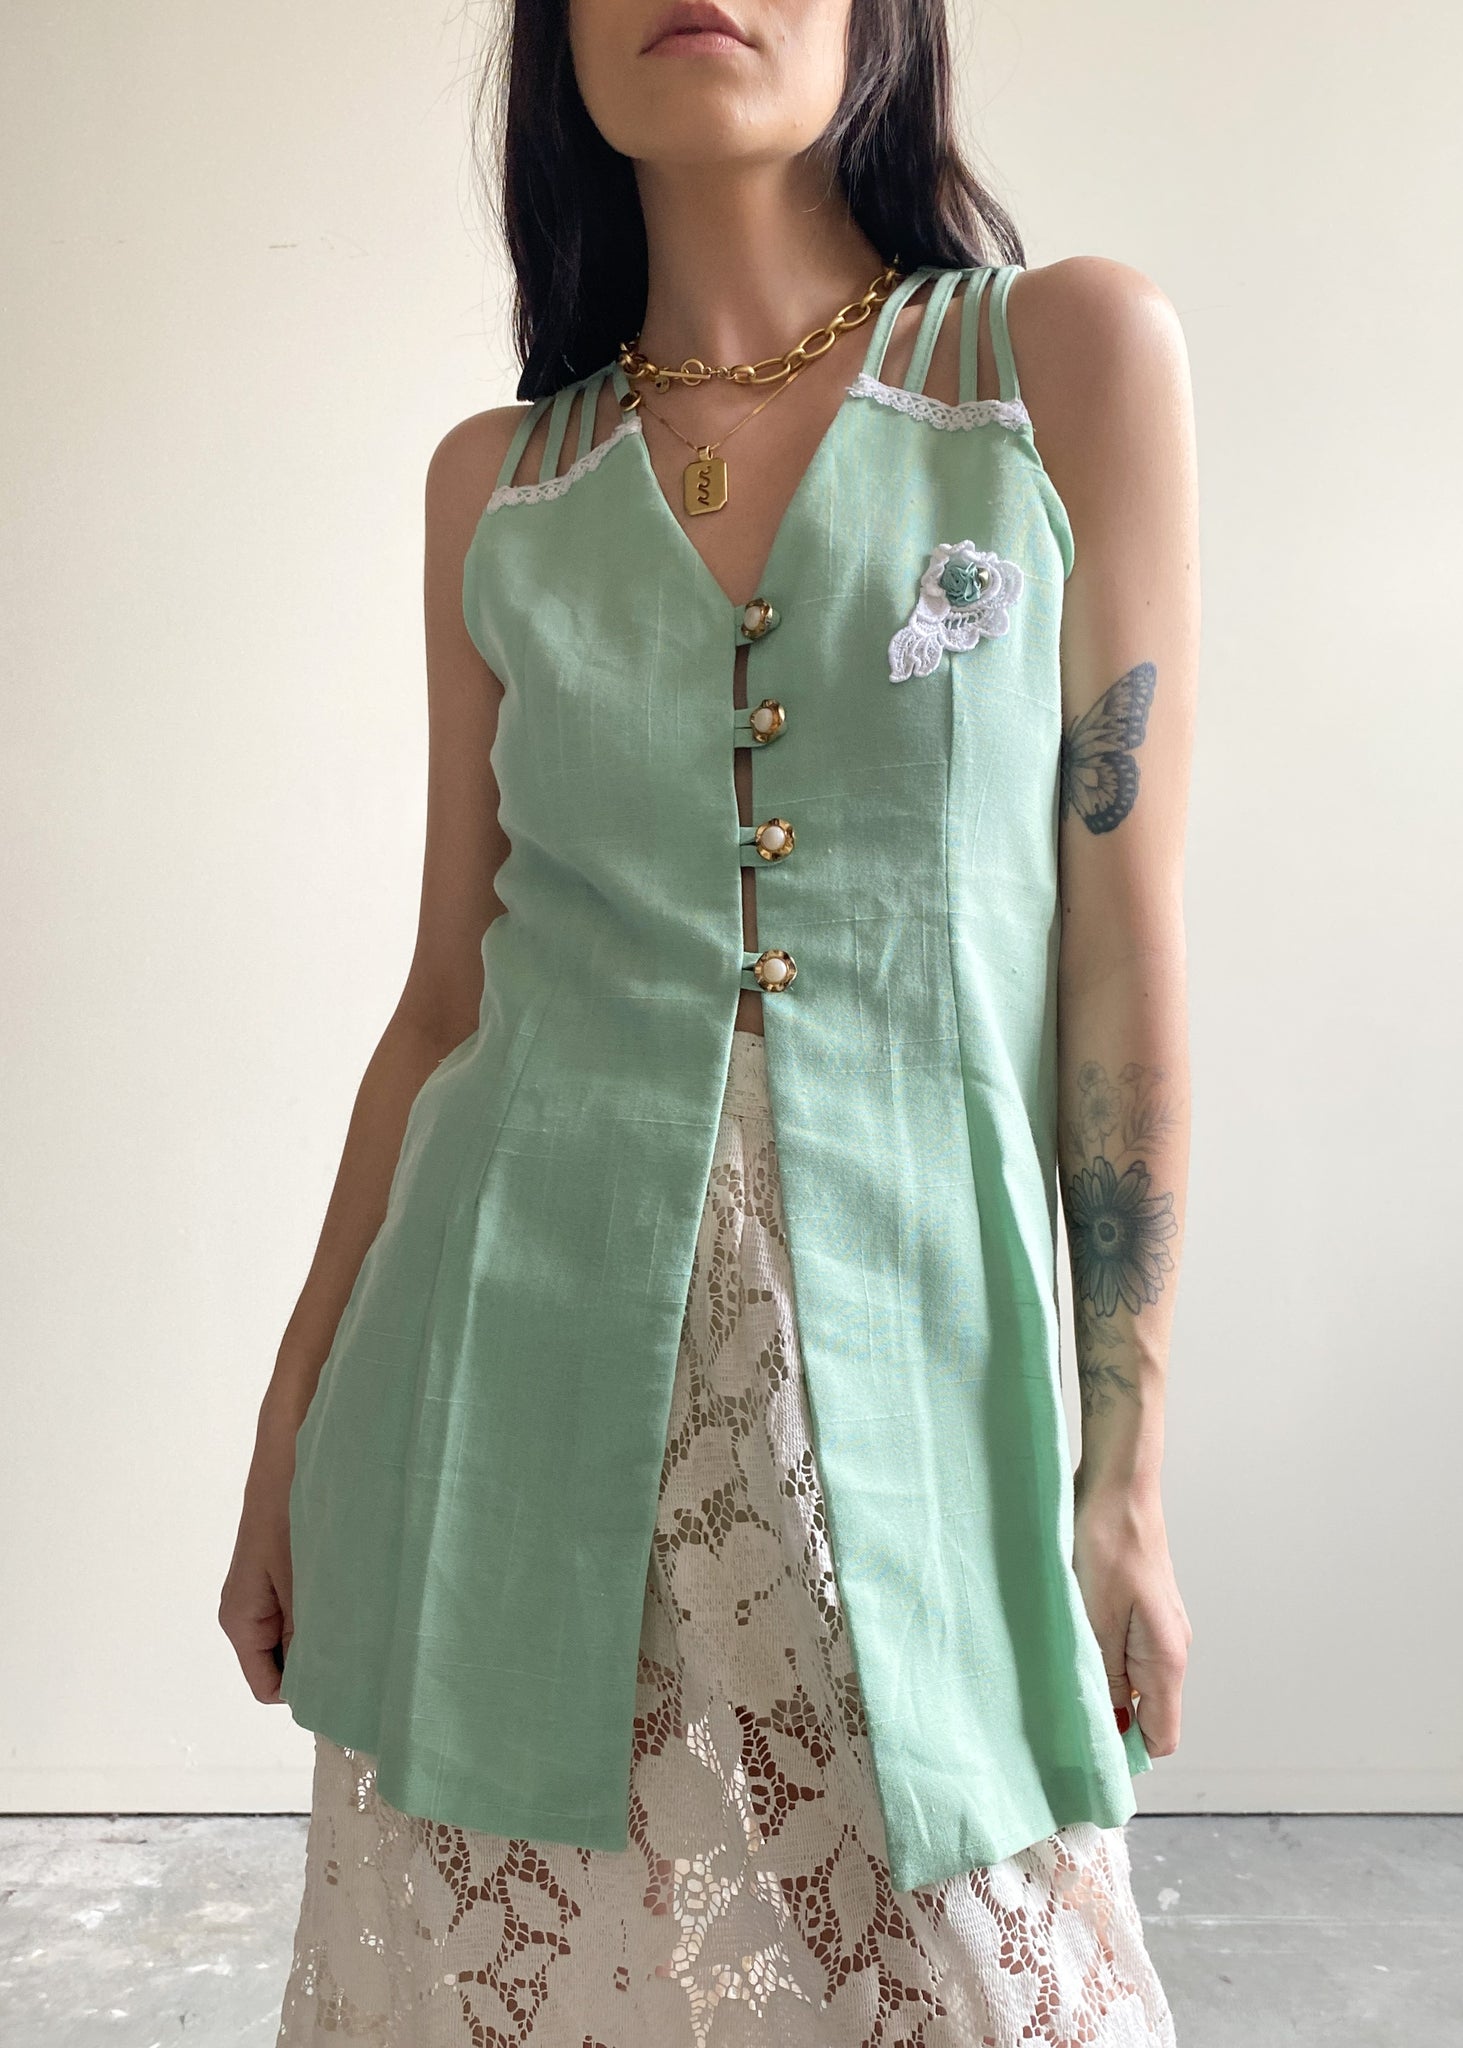 Vintage Apple Tree Fashions Mint Green Vest/Top (S)